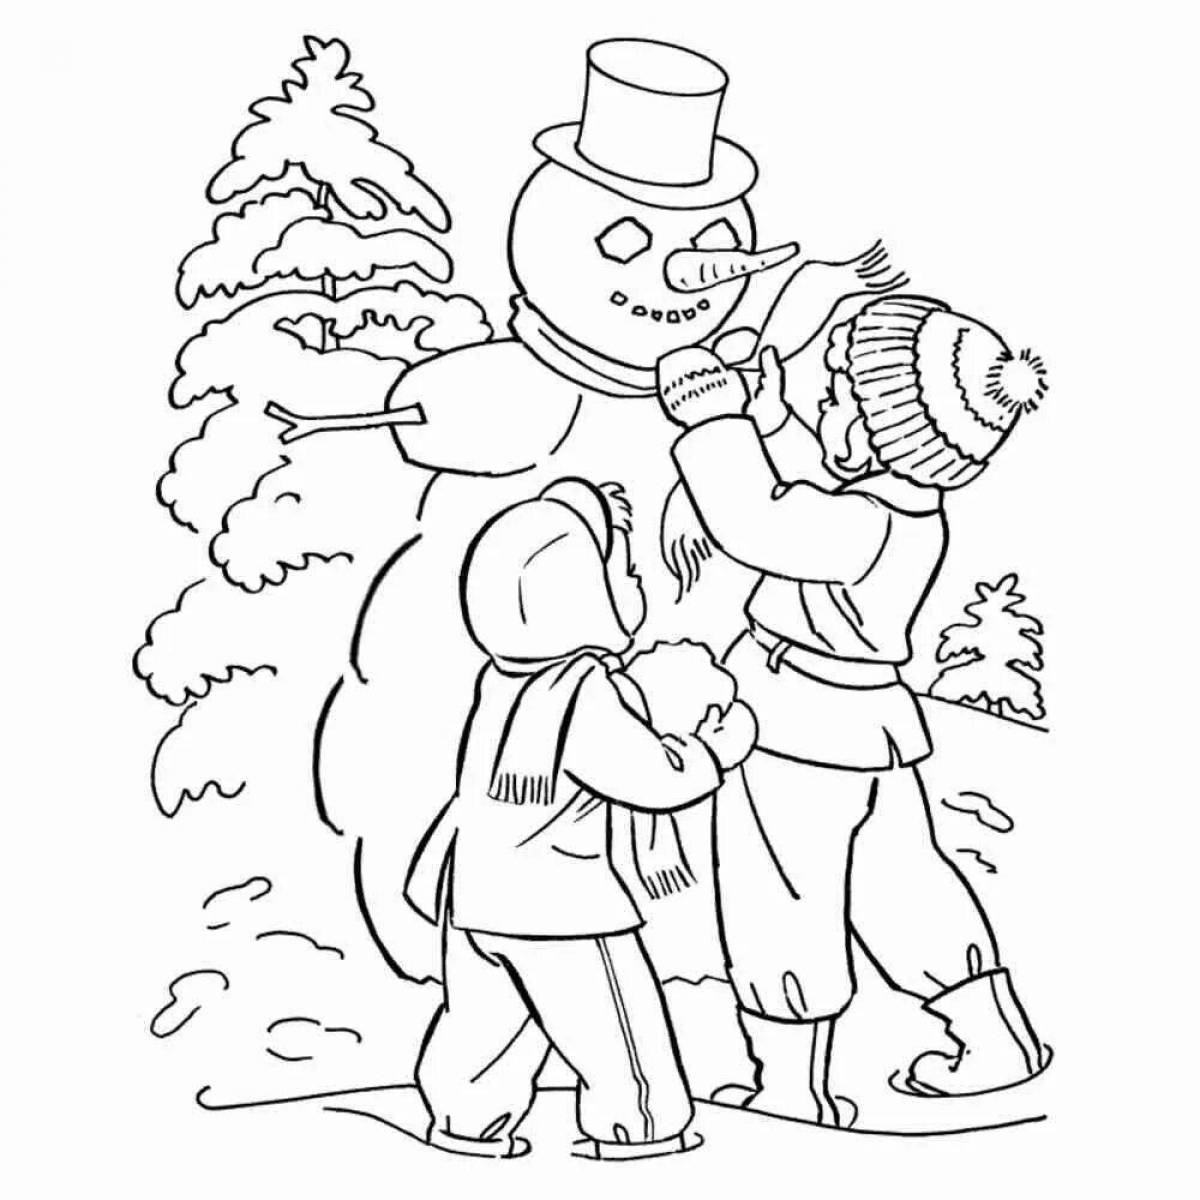 Fabulous snowman coloring page